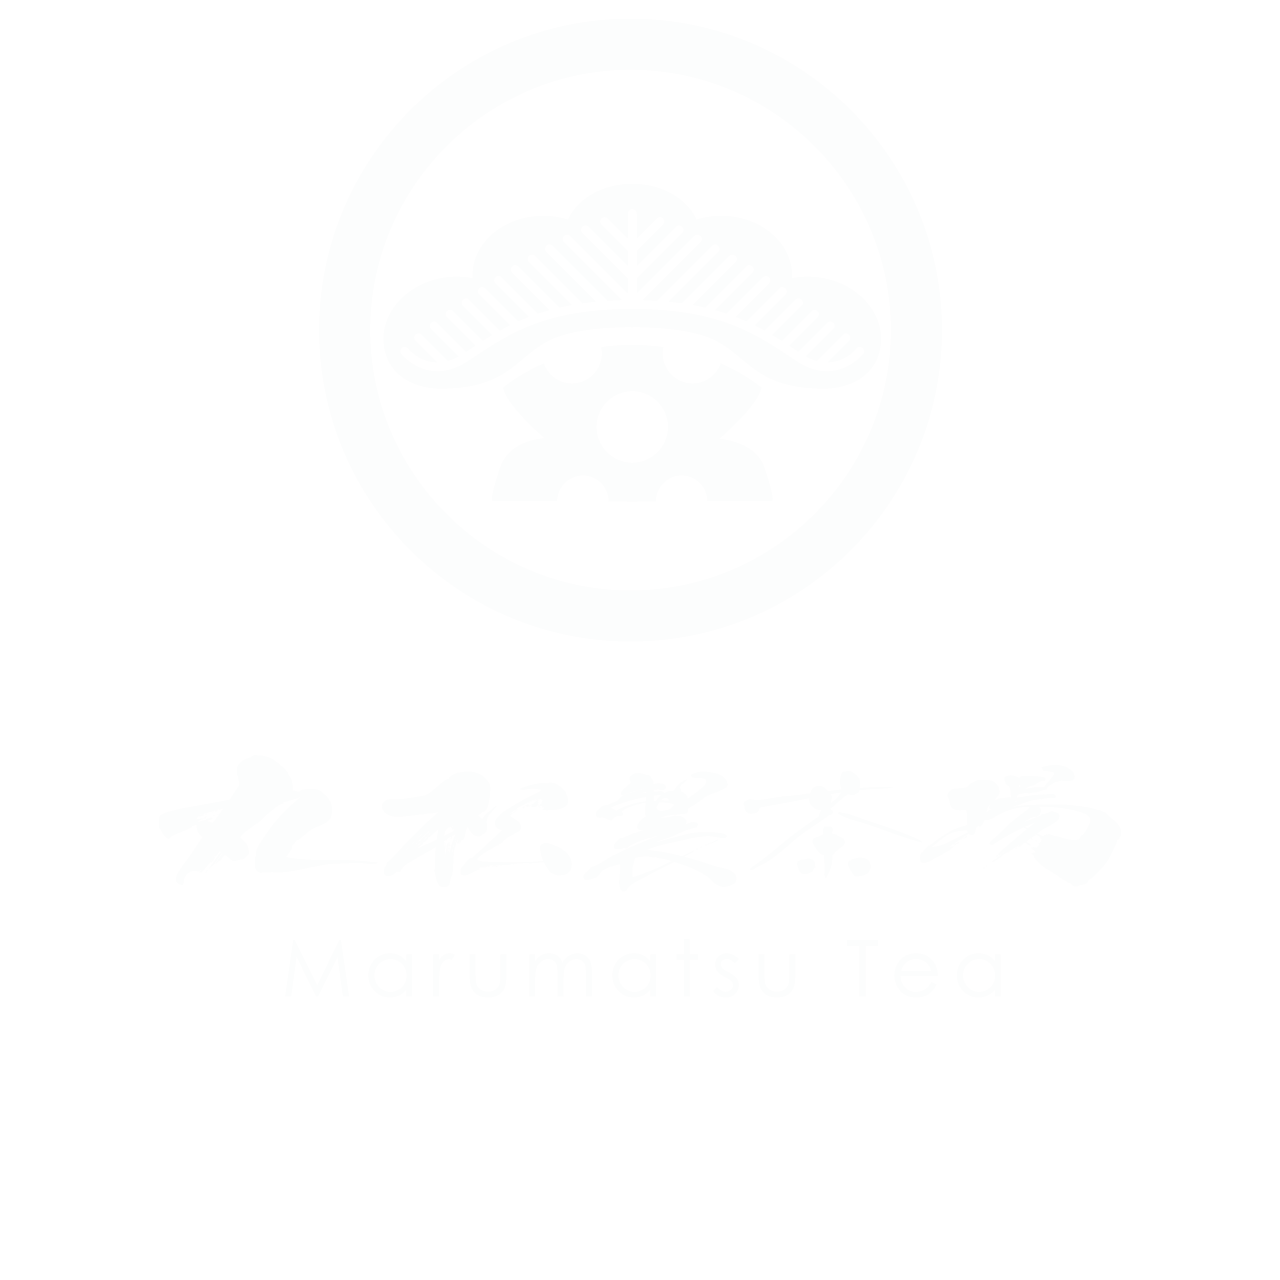 Marumatsu Tea Corporation Established 1899